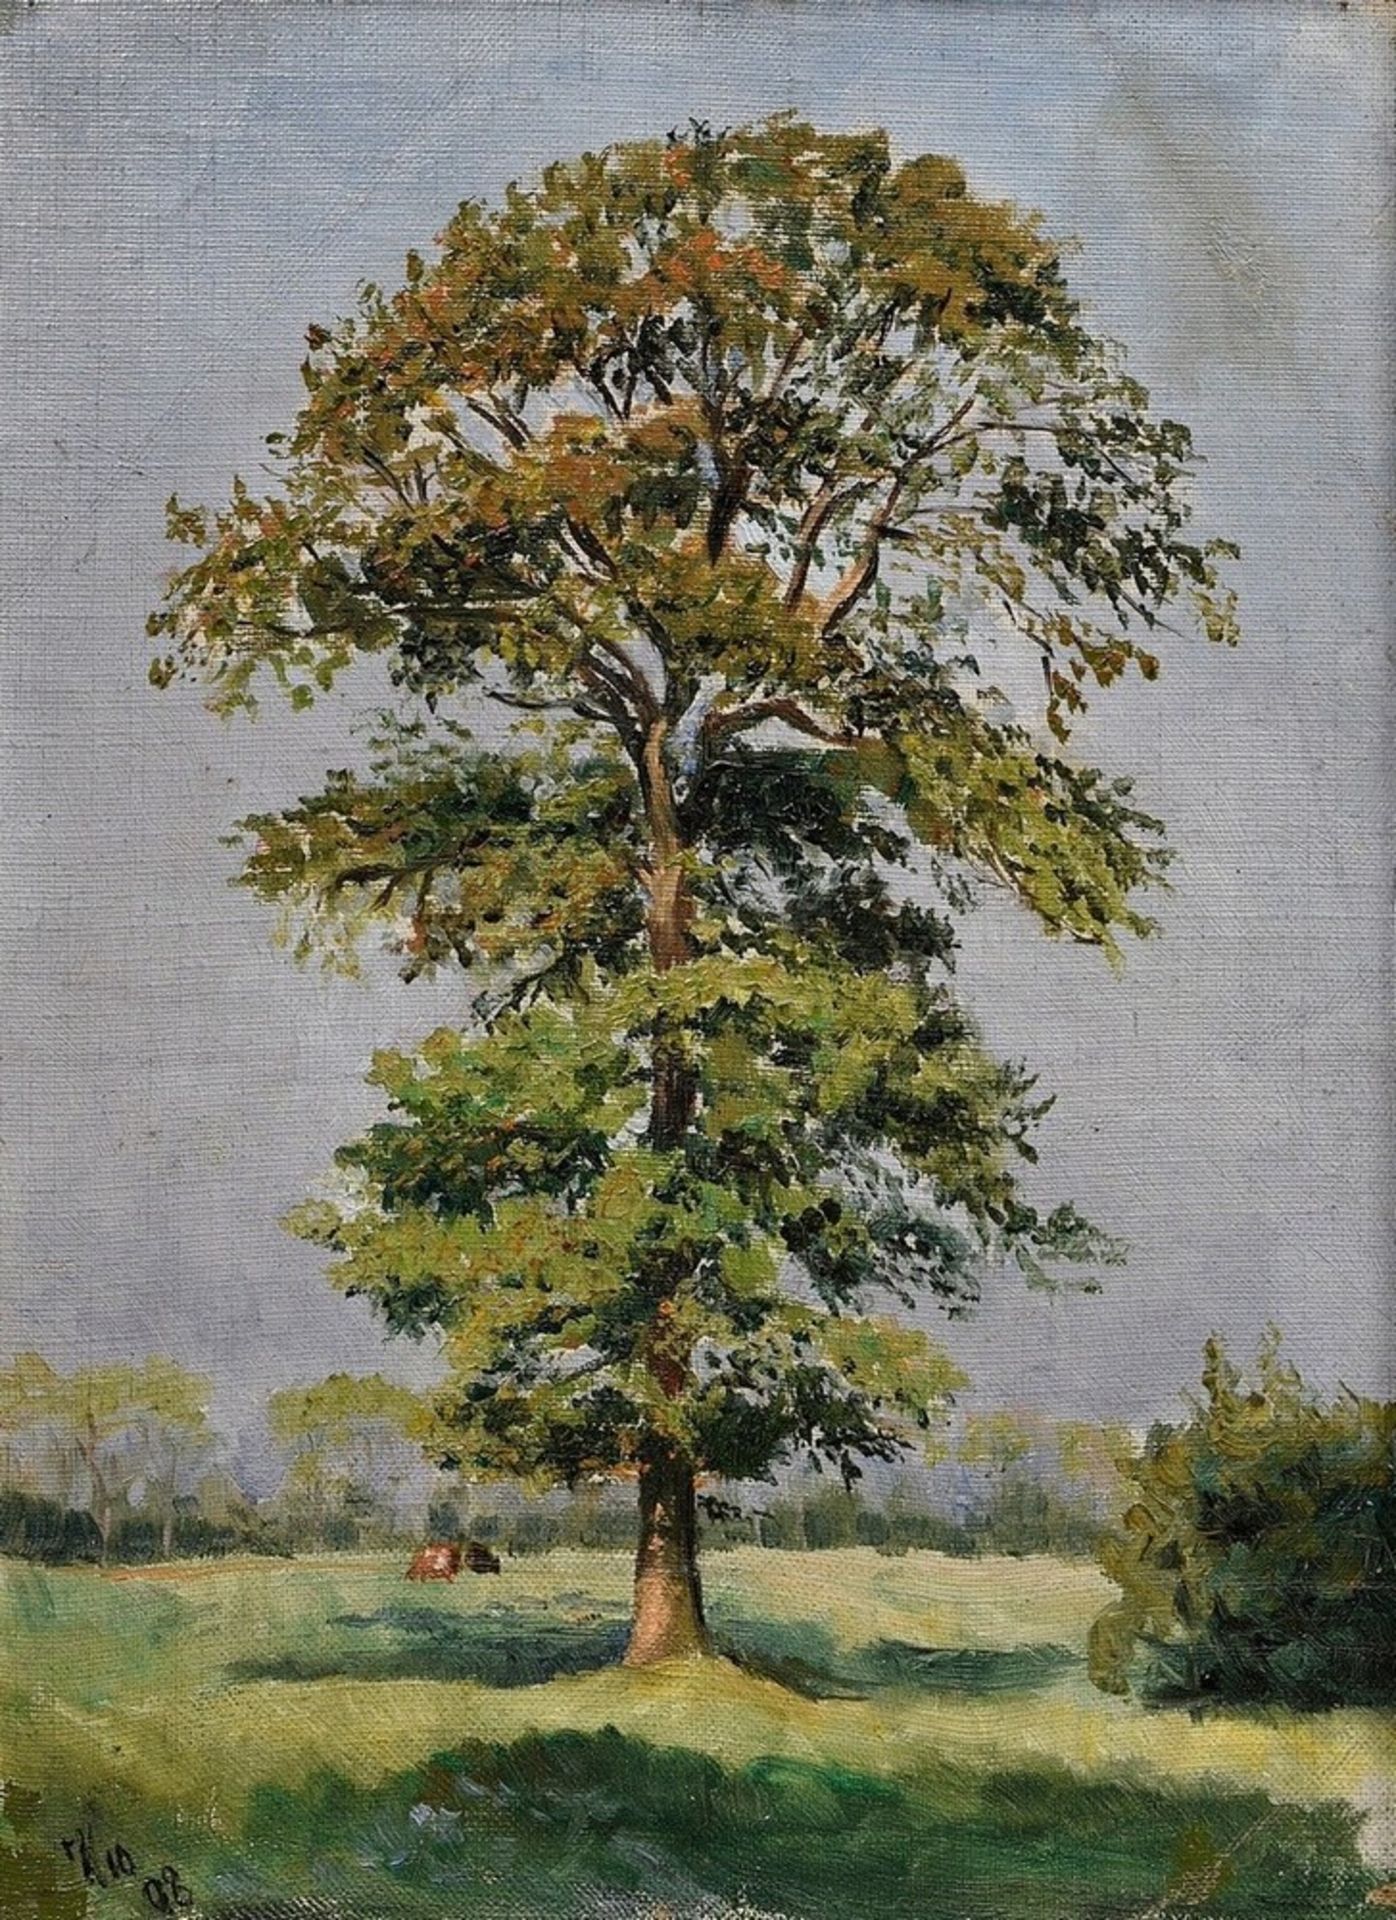 Reuss-Löwenstein, Harry (1880-1966) "Solitary Tree" 1908, oil/canvas mounted on wood, dat./inscr. l